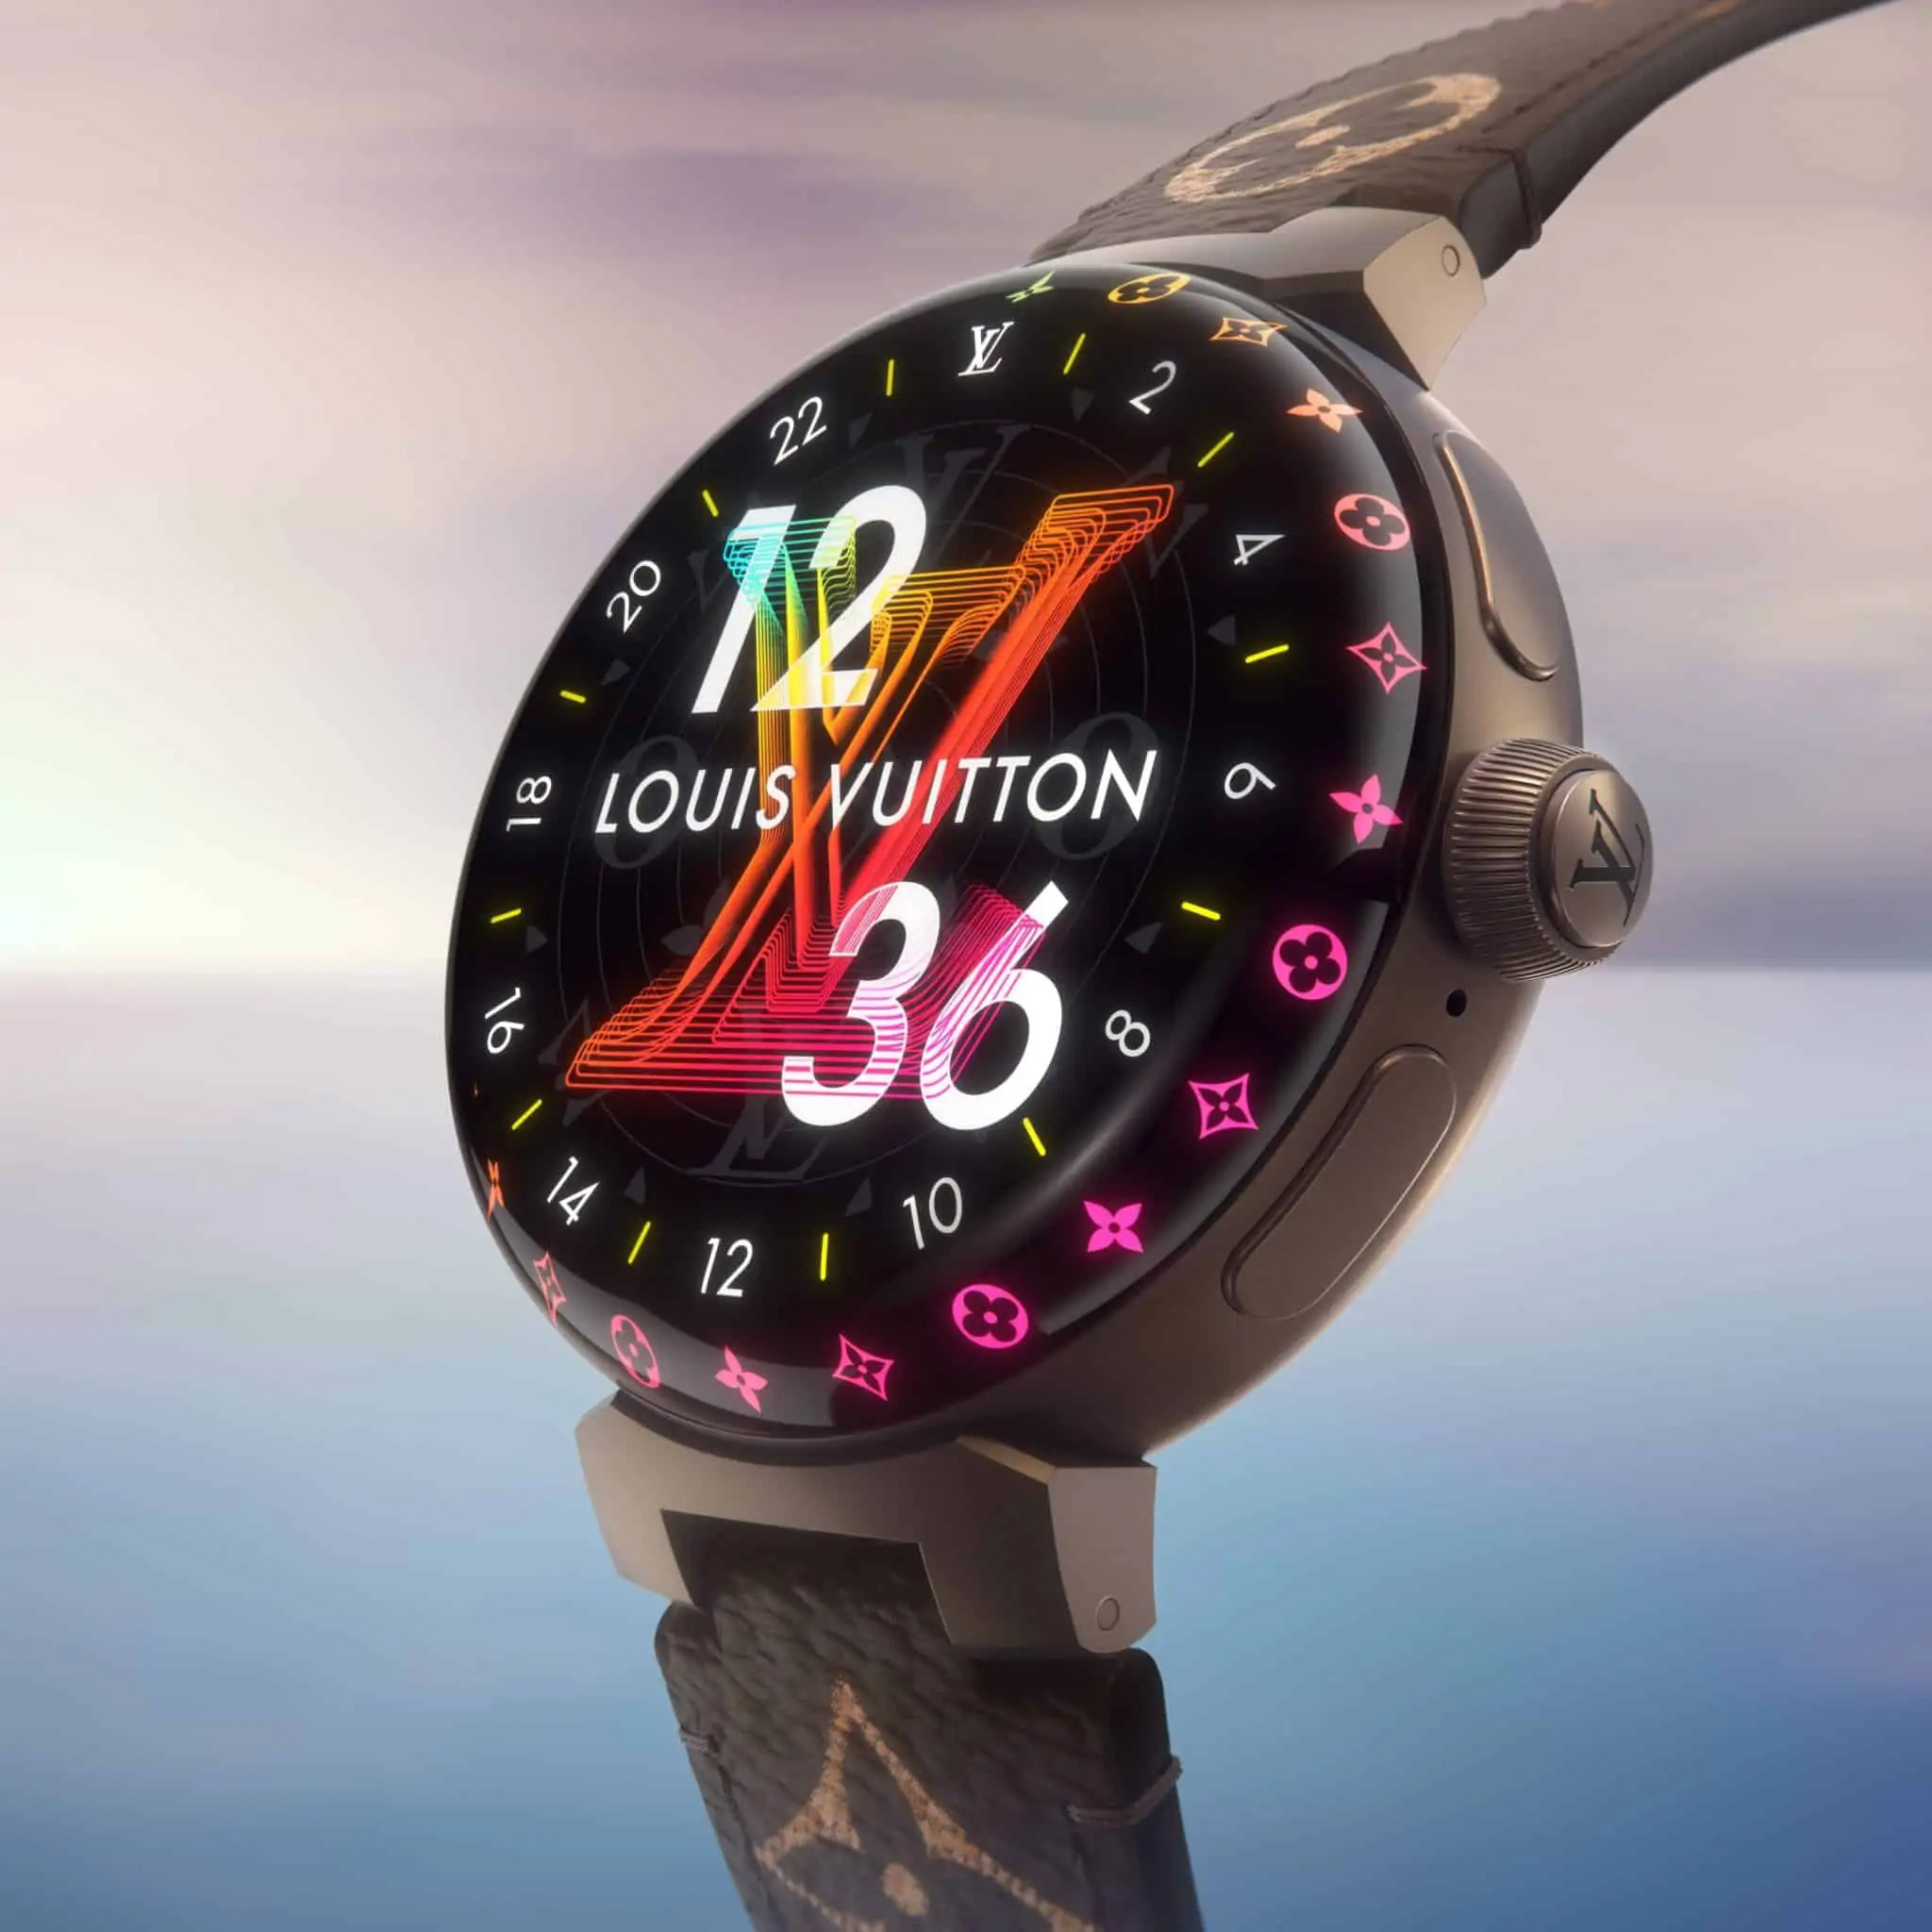 Louis Vuitton Tambour Horizon Light Up smart watches 05